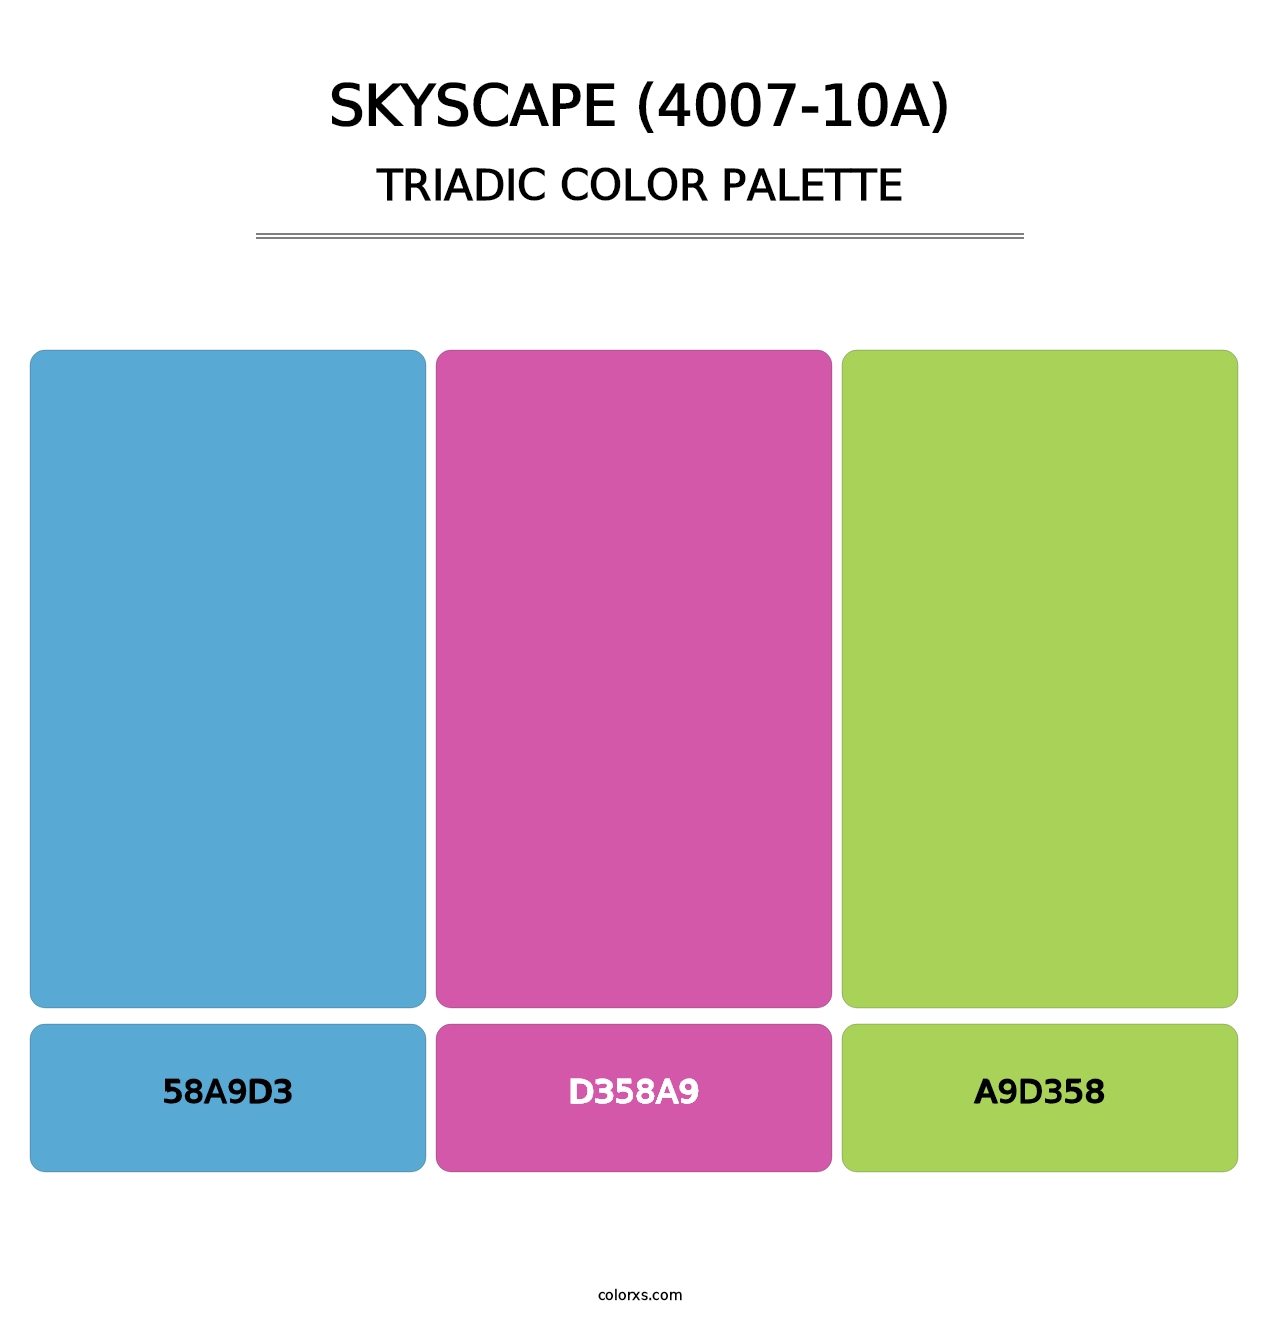 Skyscape (4007-10A) - Triadic Color Palette